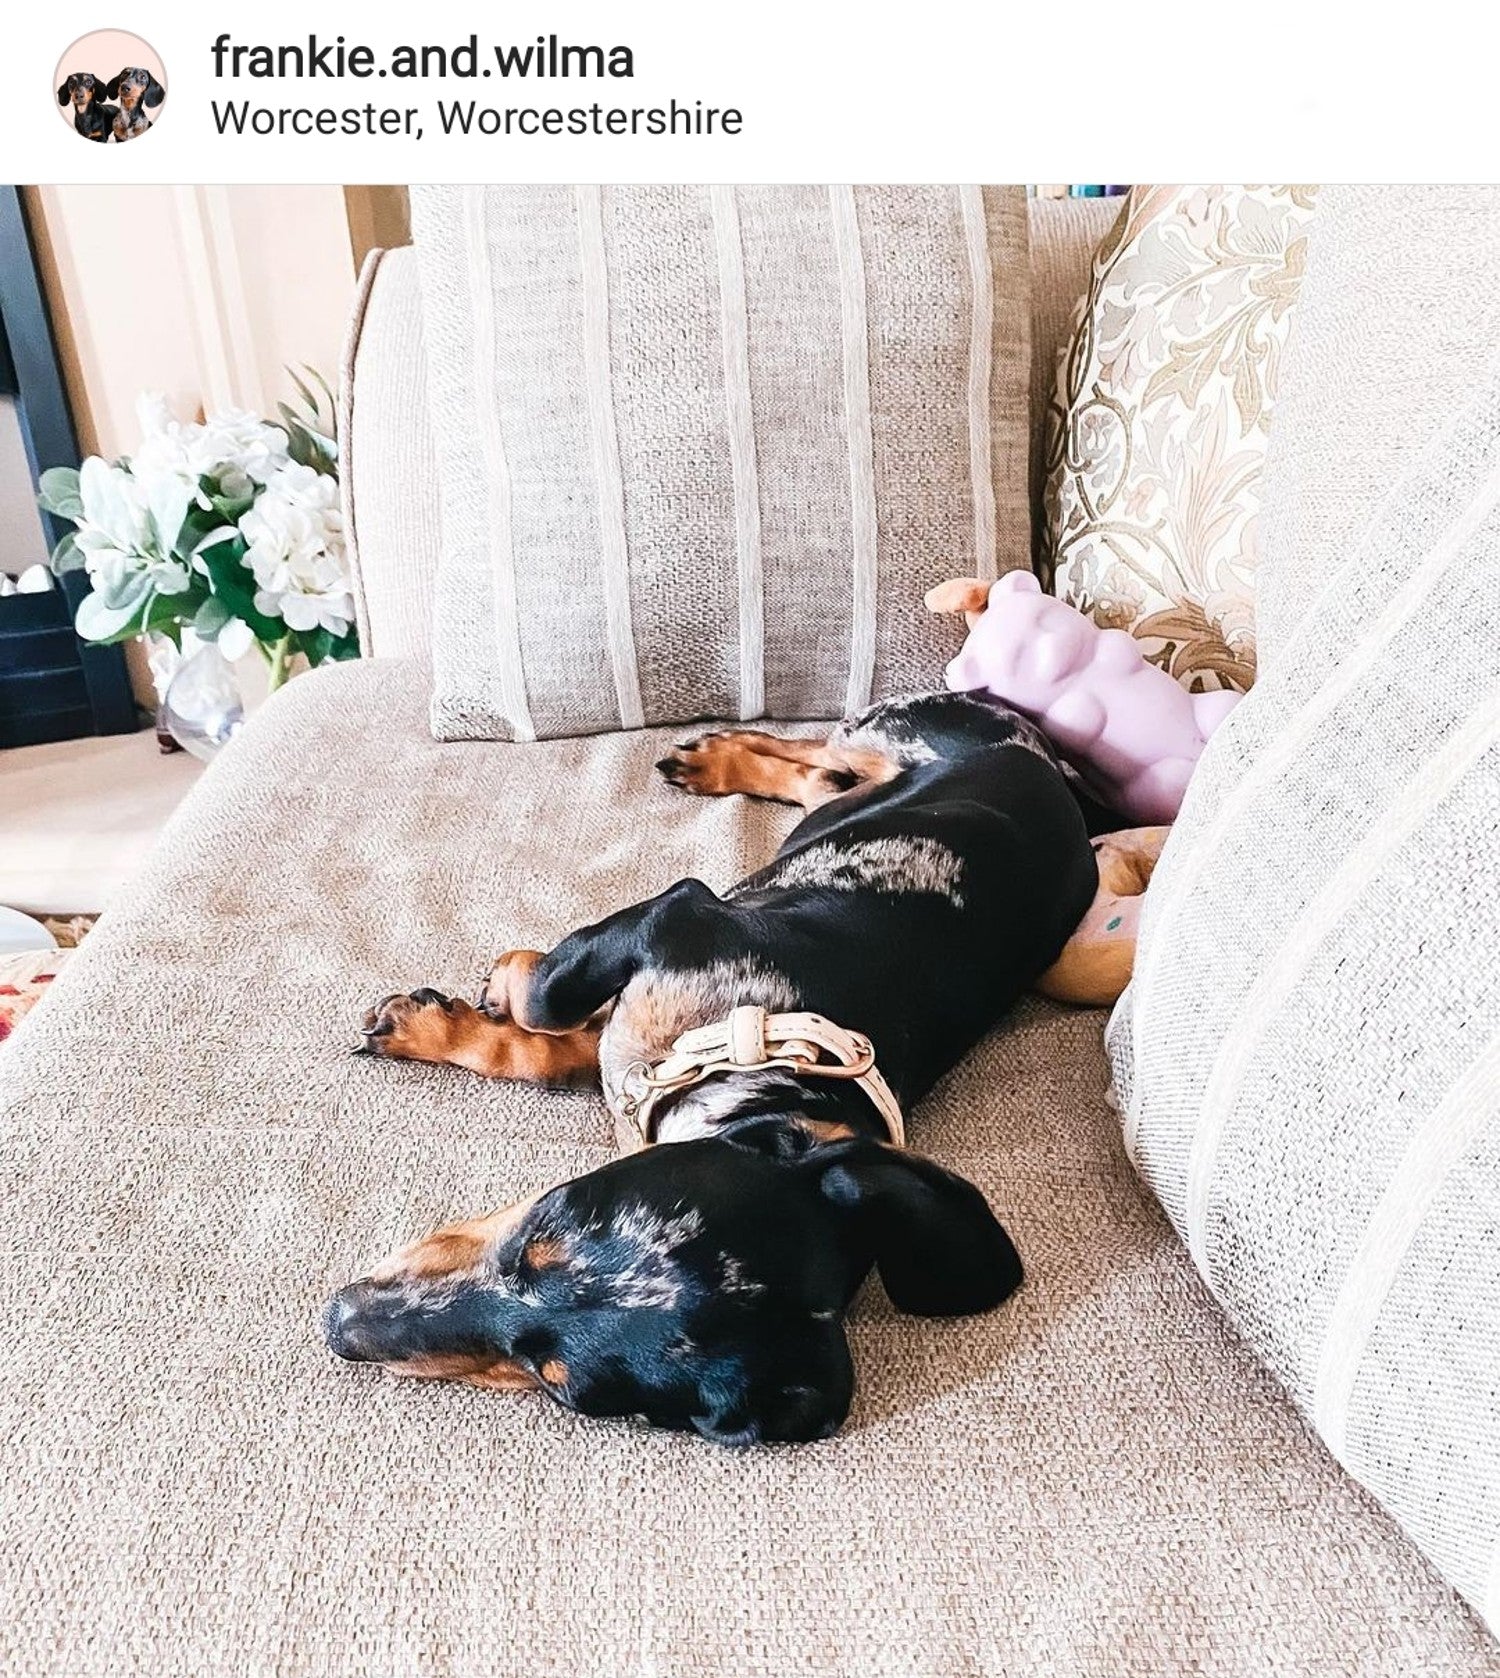 Wilma the Small Dachshund Resting on Sofa (via Instagram)